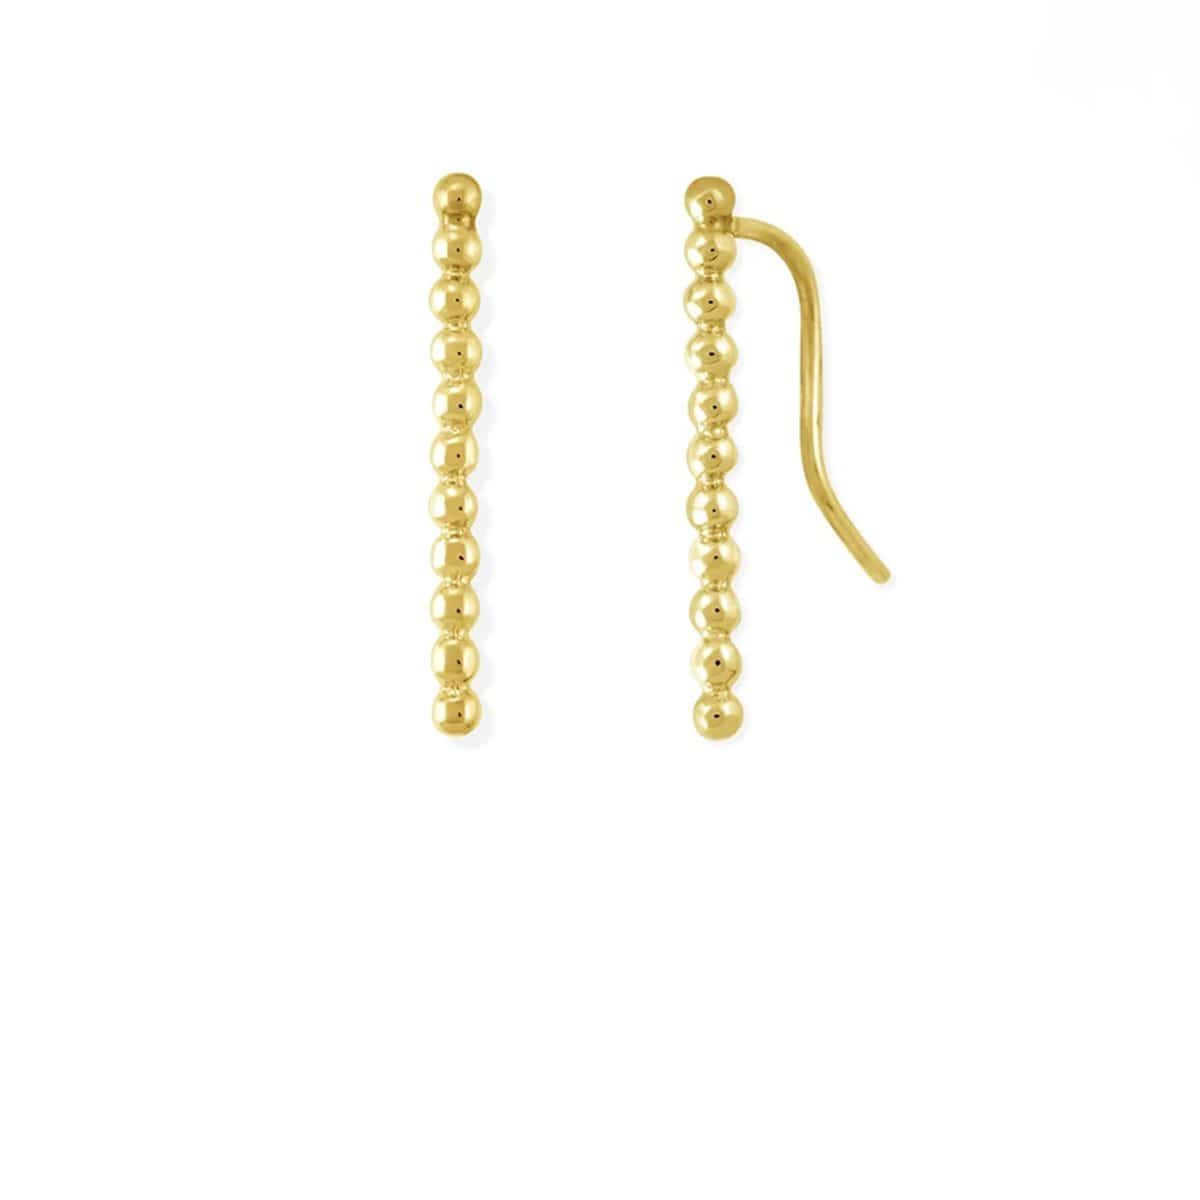 Boma Jewelry Earrings 14K Gold Vermeil Dot Long Bar Ear Crawlers